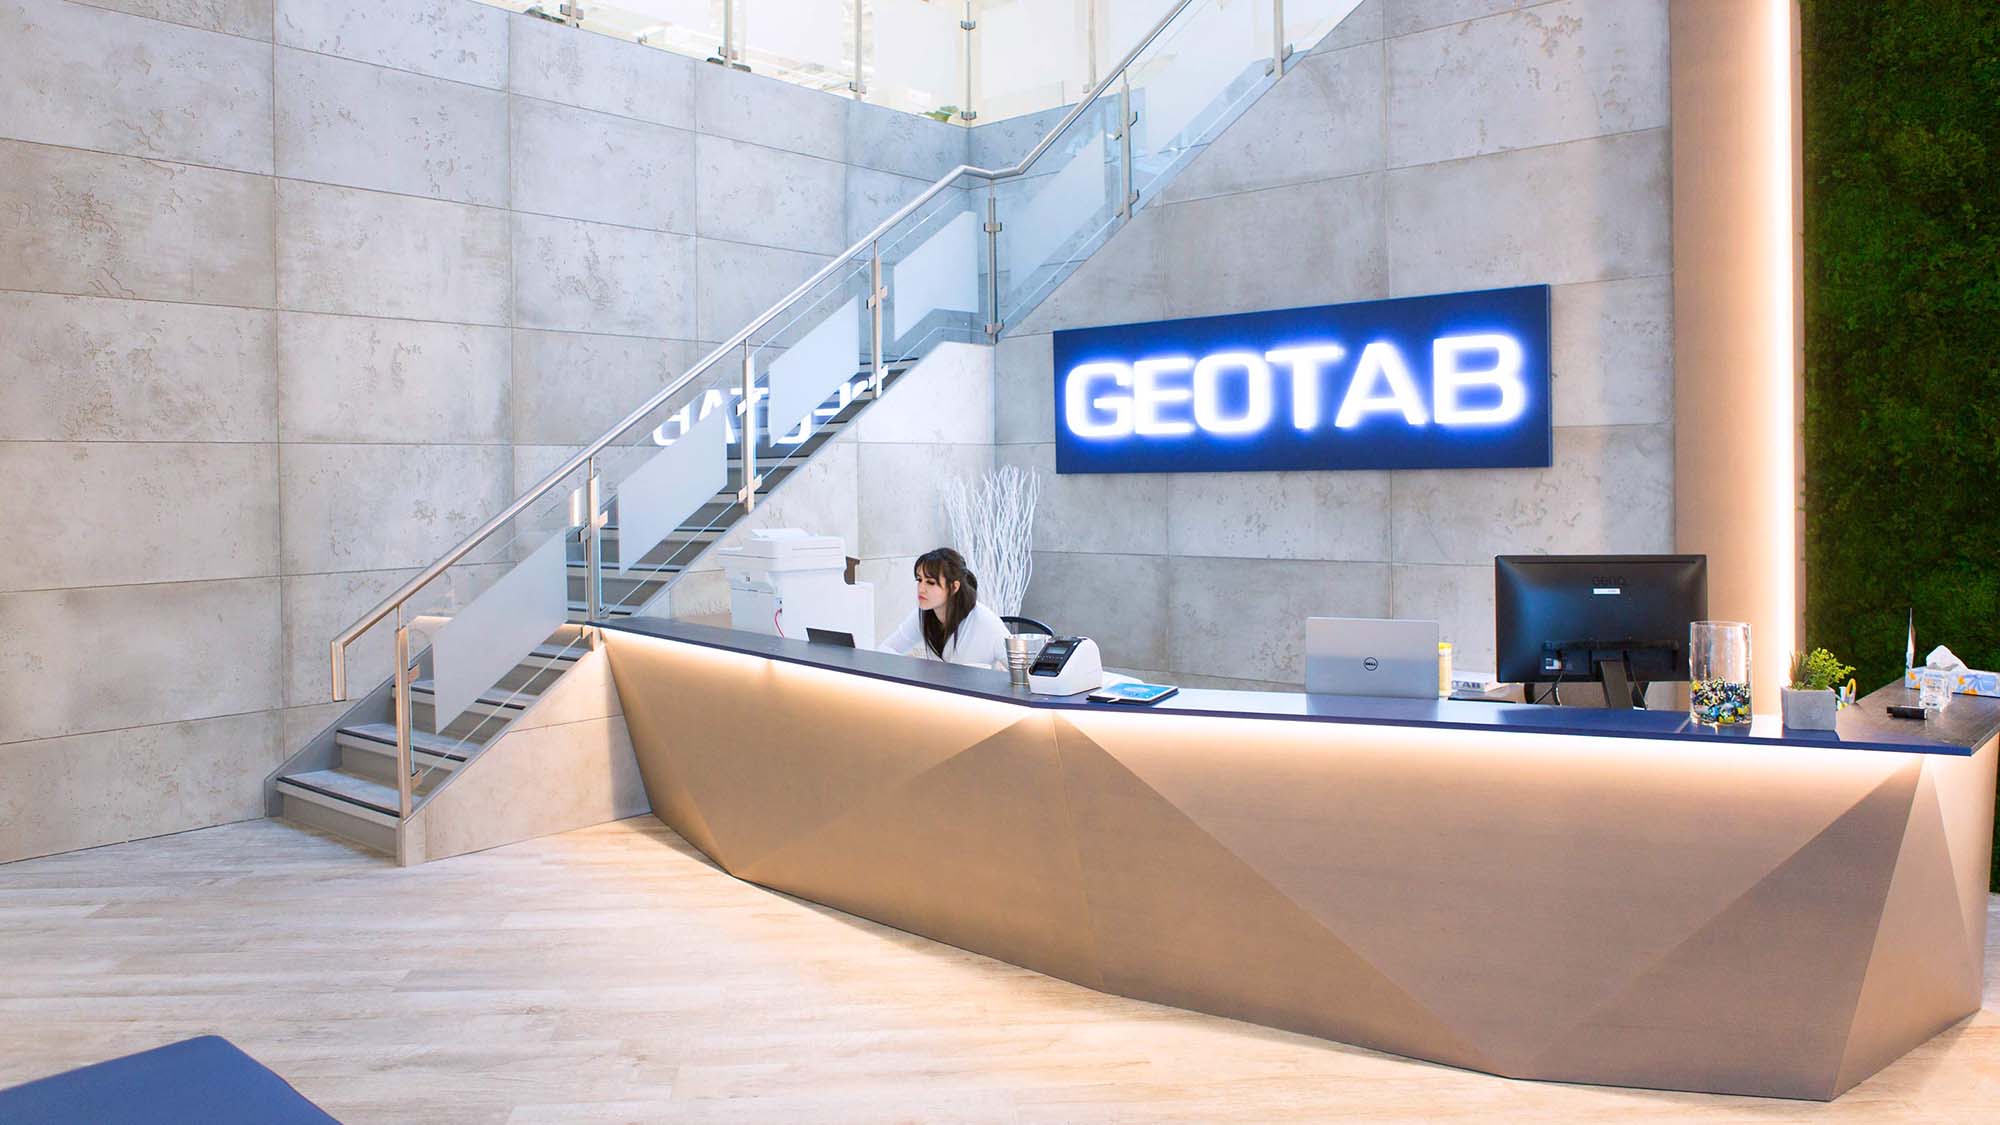 Geotab总部接待处，有接待员